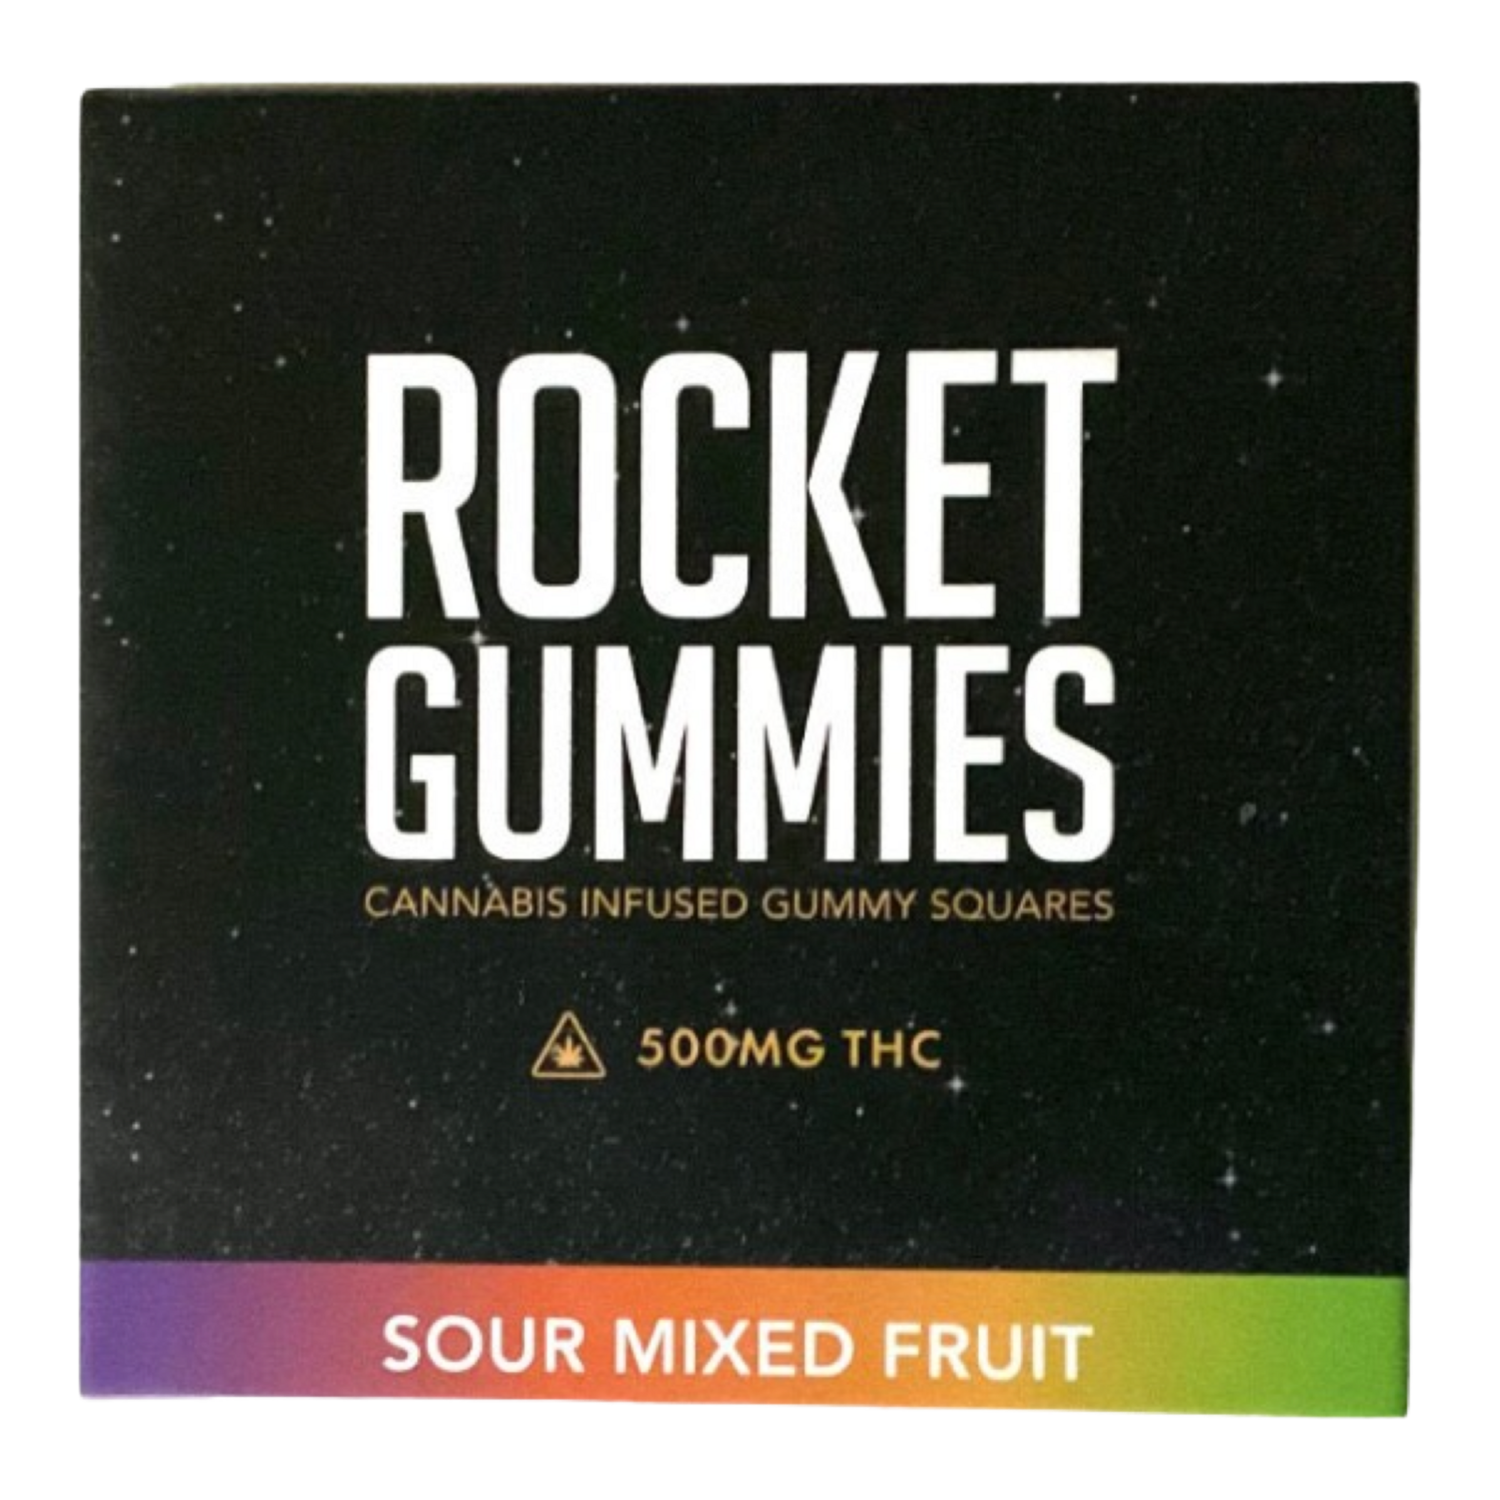 Rocket Gummies Cannabis-Infused Gummy Mixed Fruit [500mg], One: Rocket Gummies Cannabis-Infused Gummy 500mg